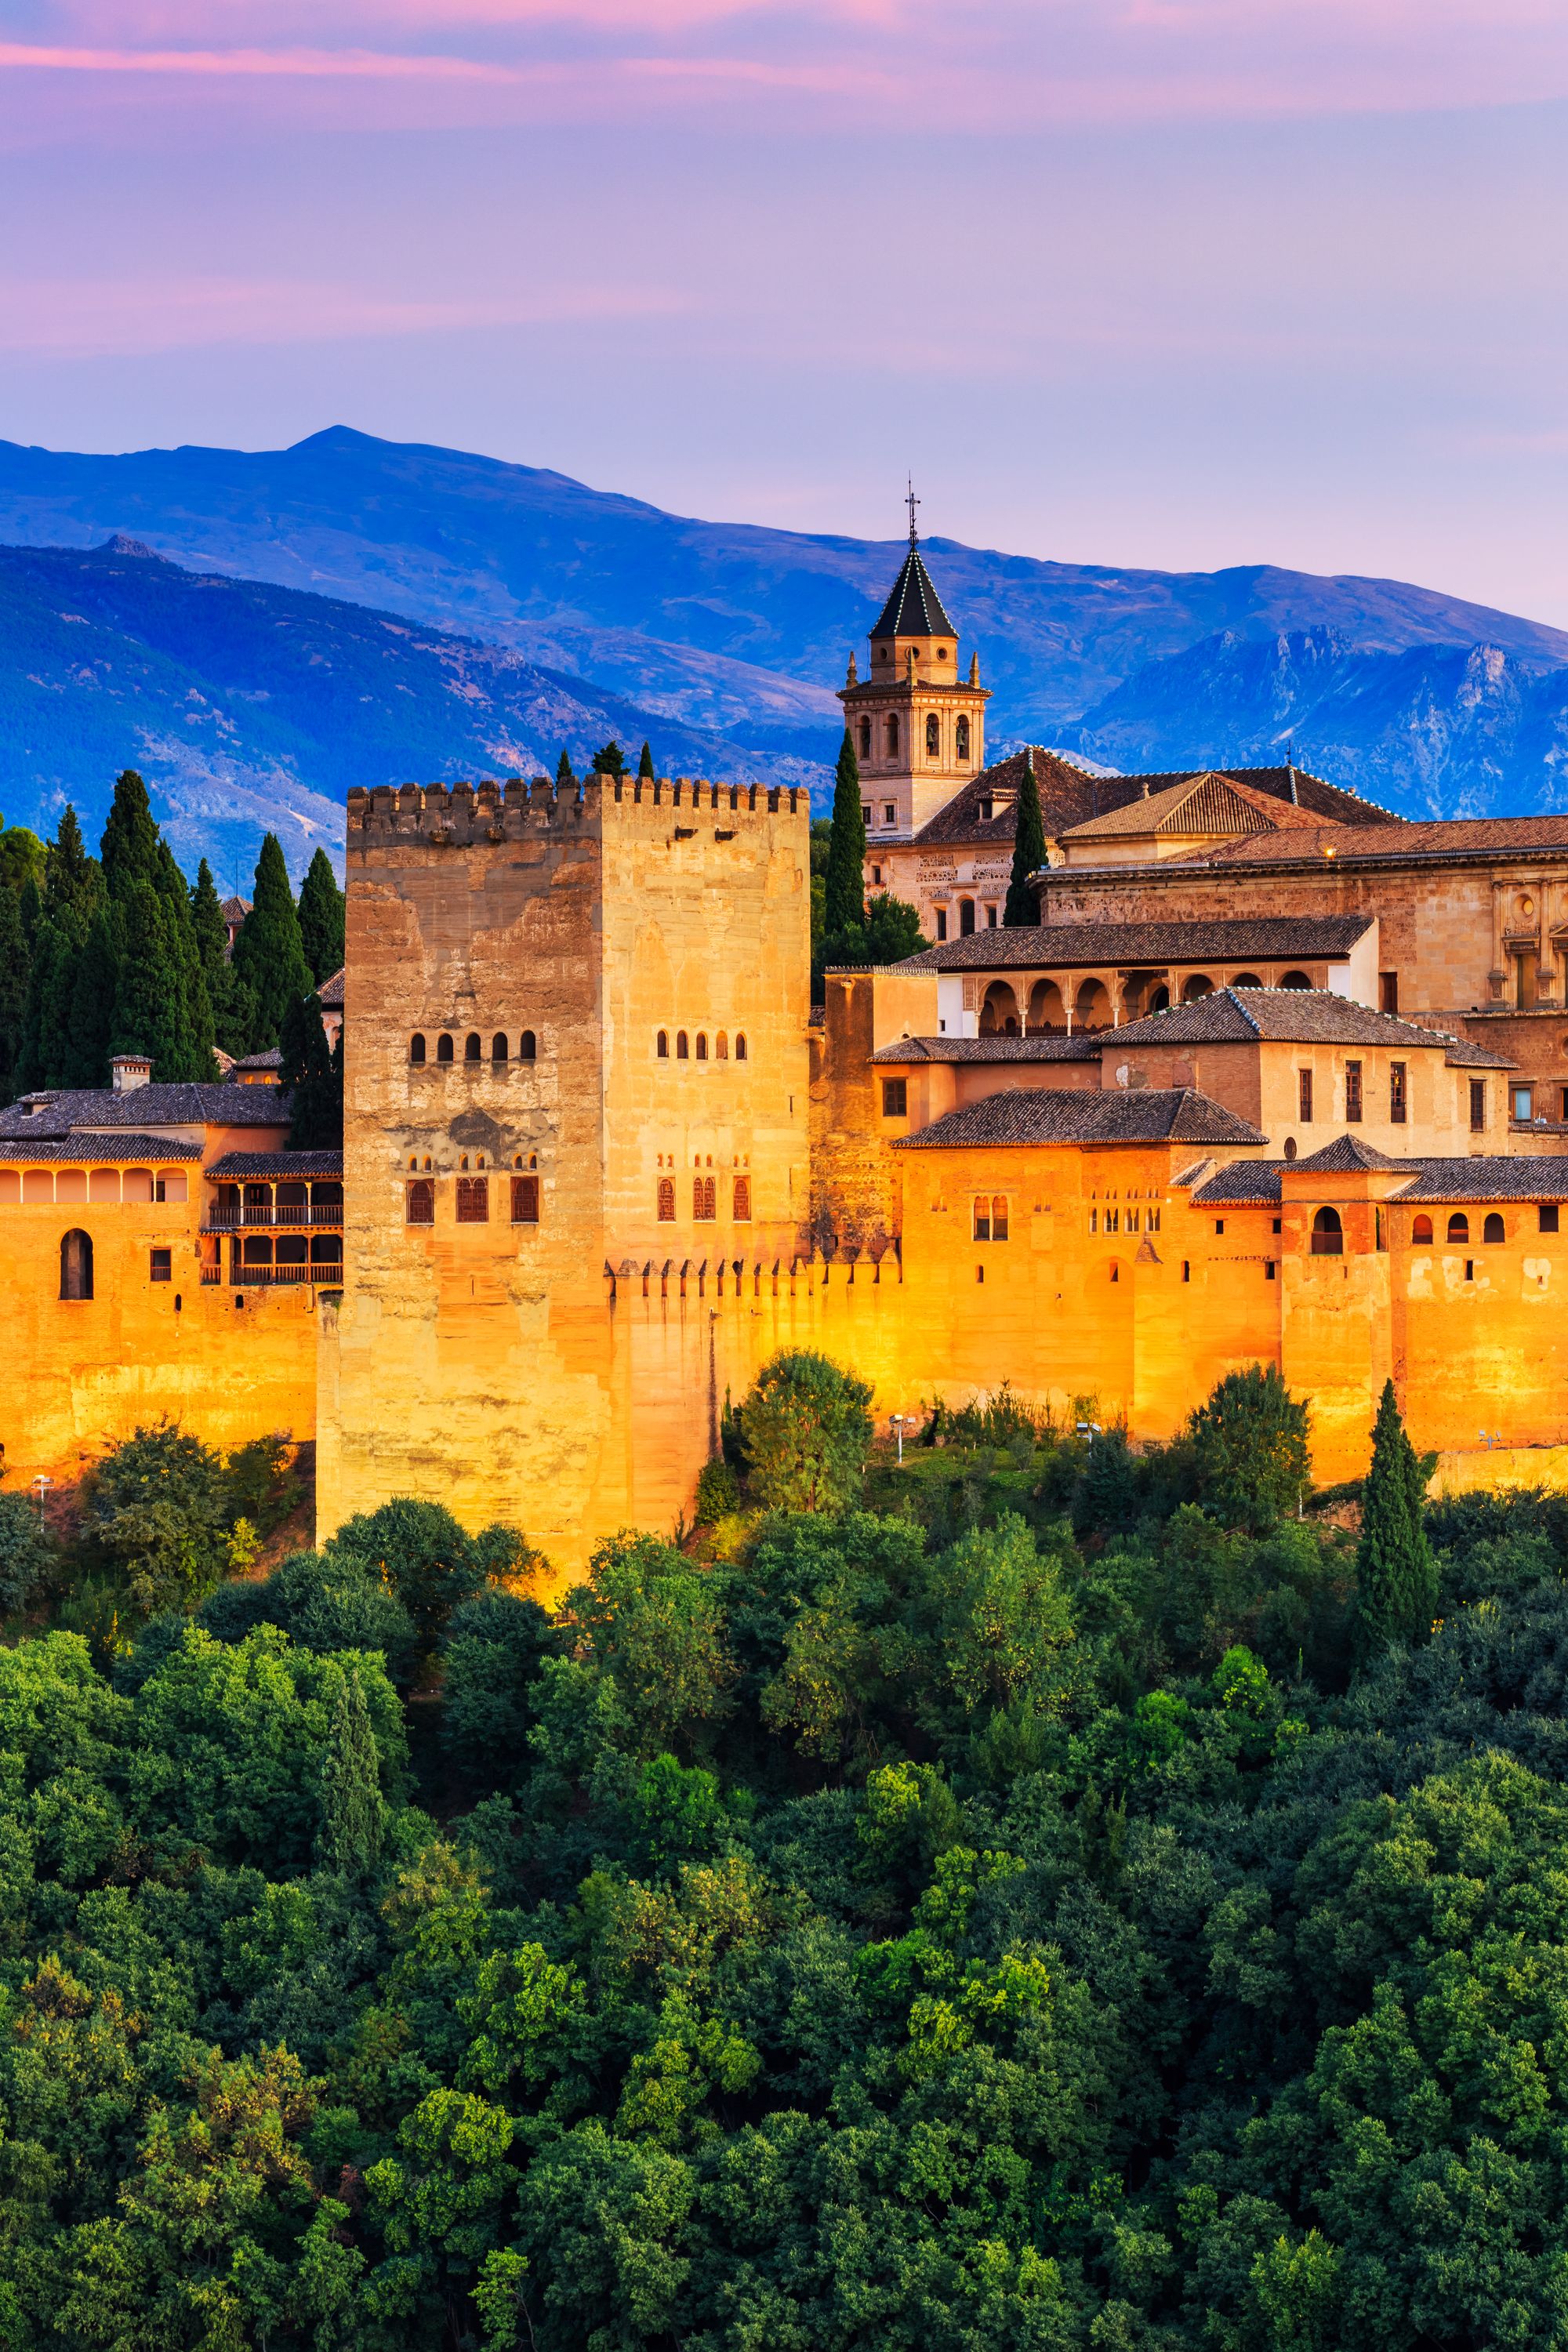 Alhambra Castle in Granada